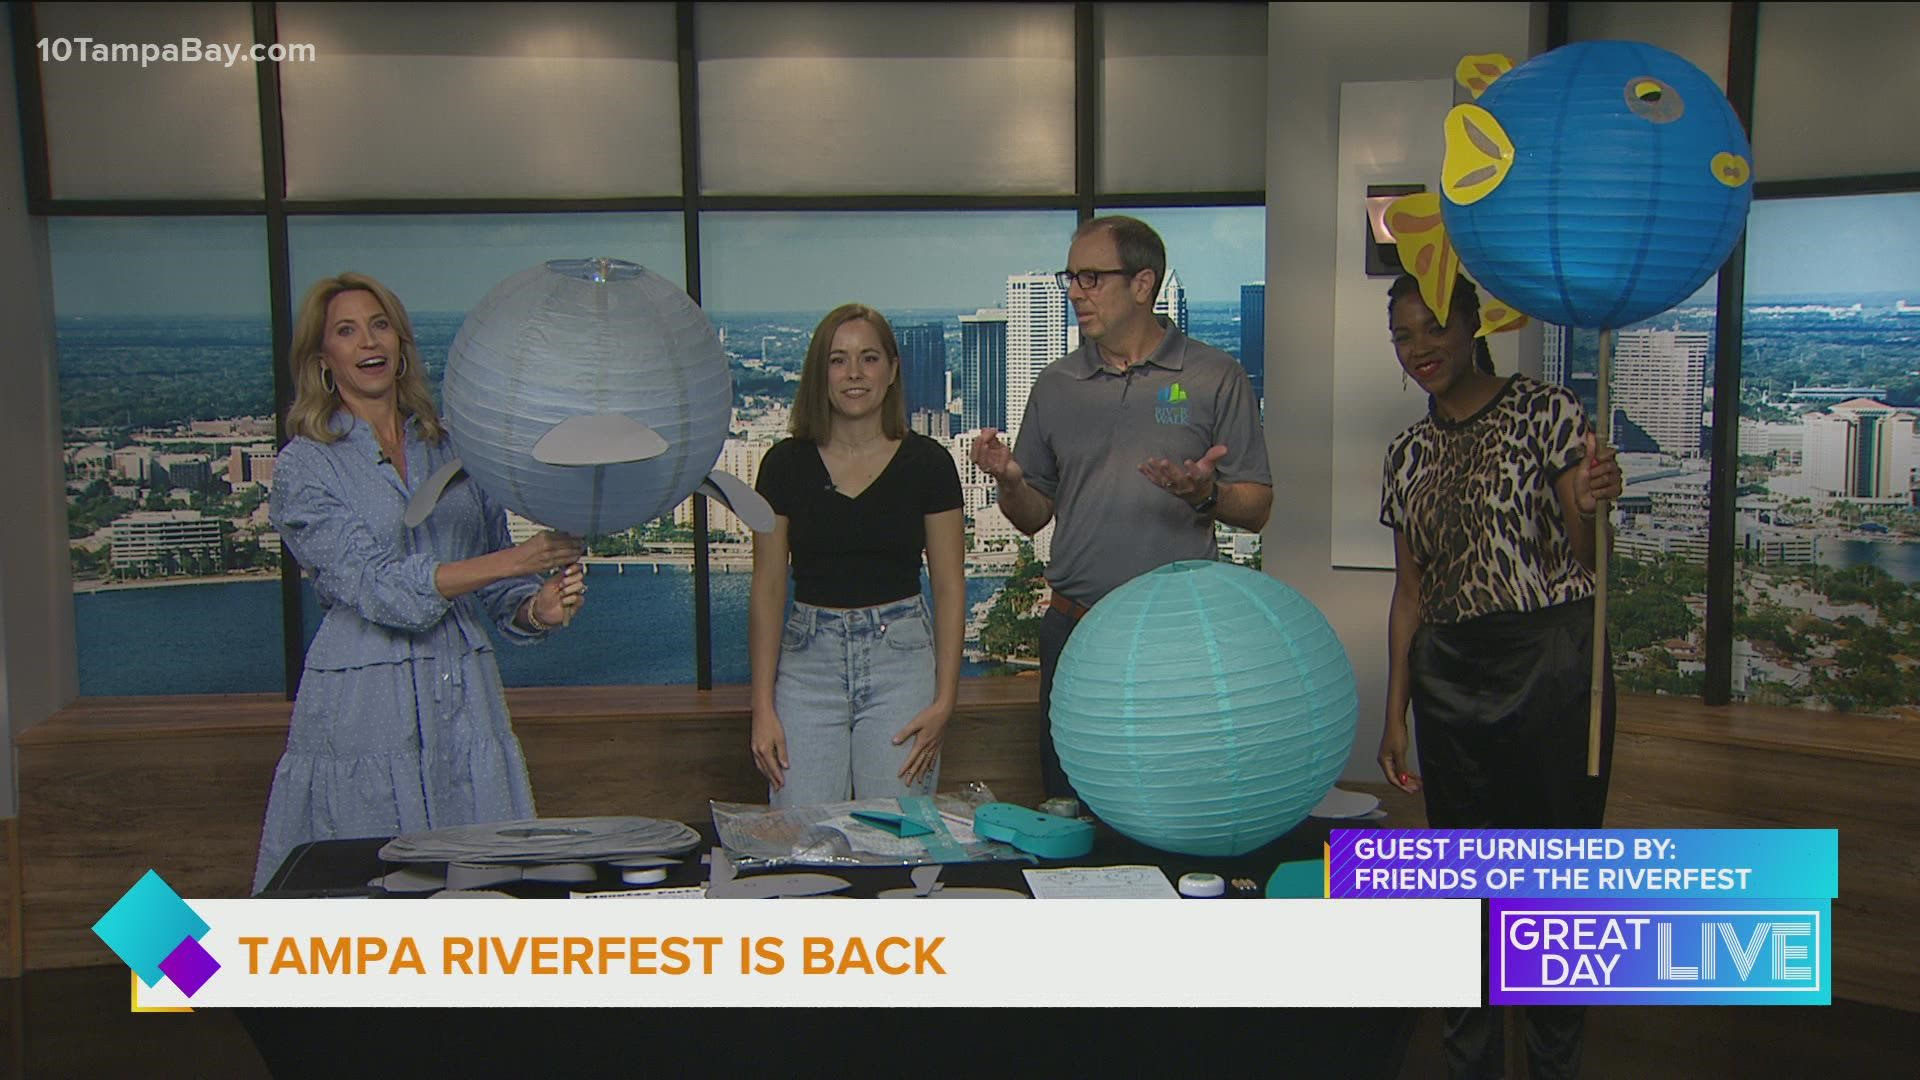 Tampa Riverfest is back